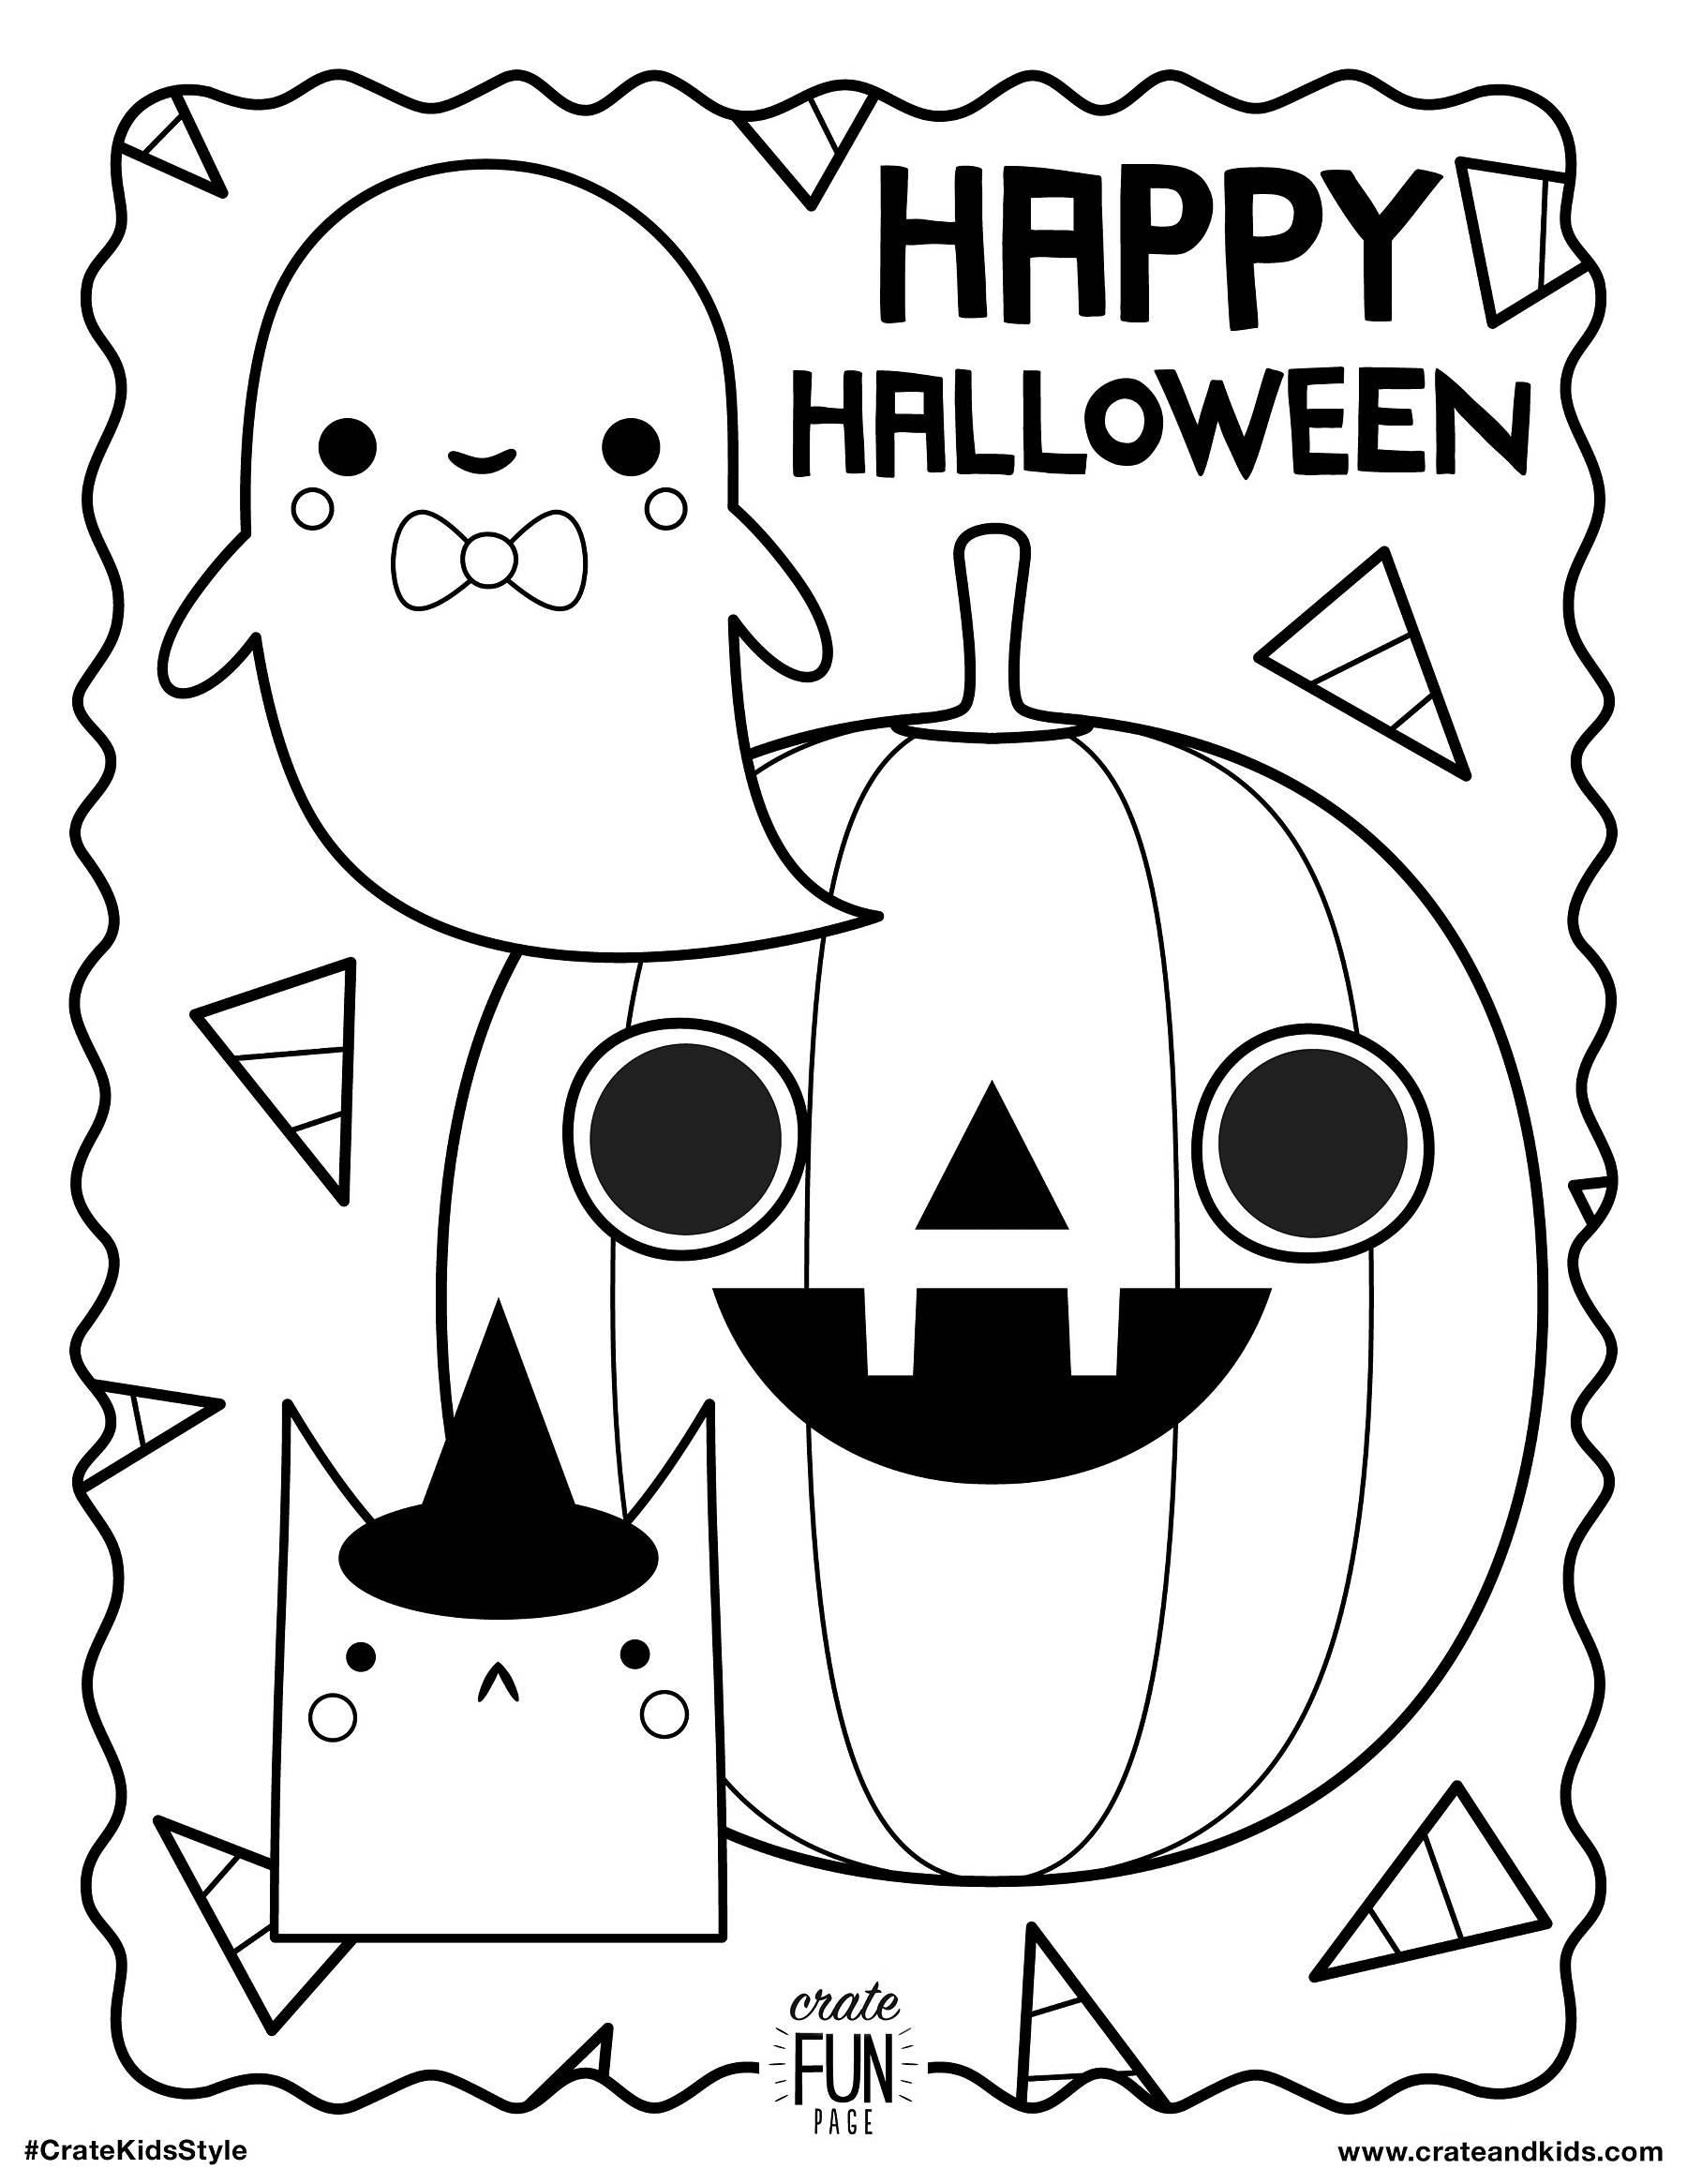 kids-halloween-free-printable-coloring-page-crate-kids